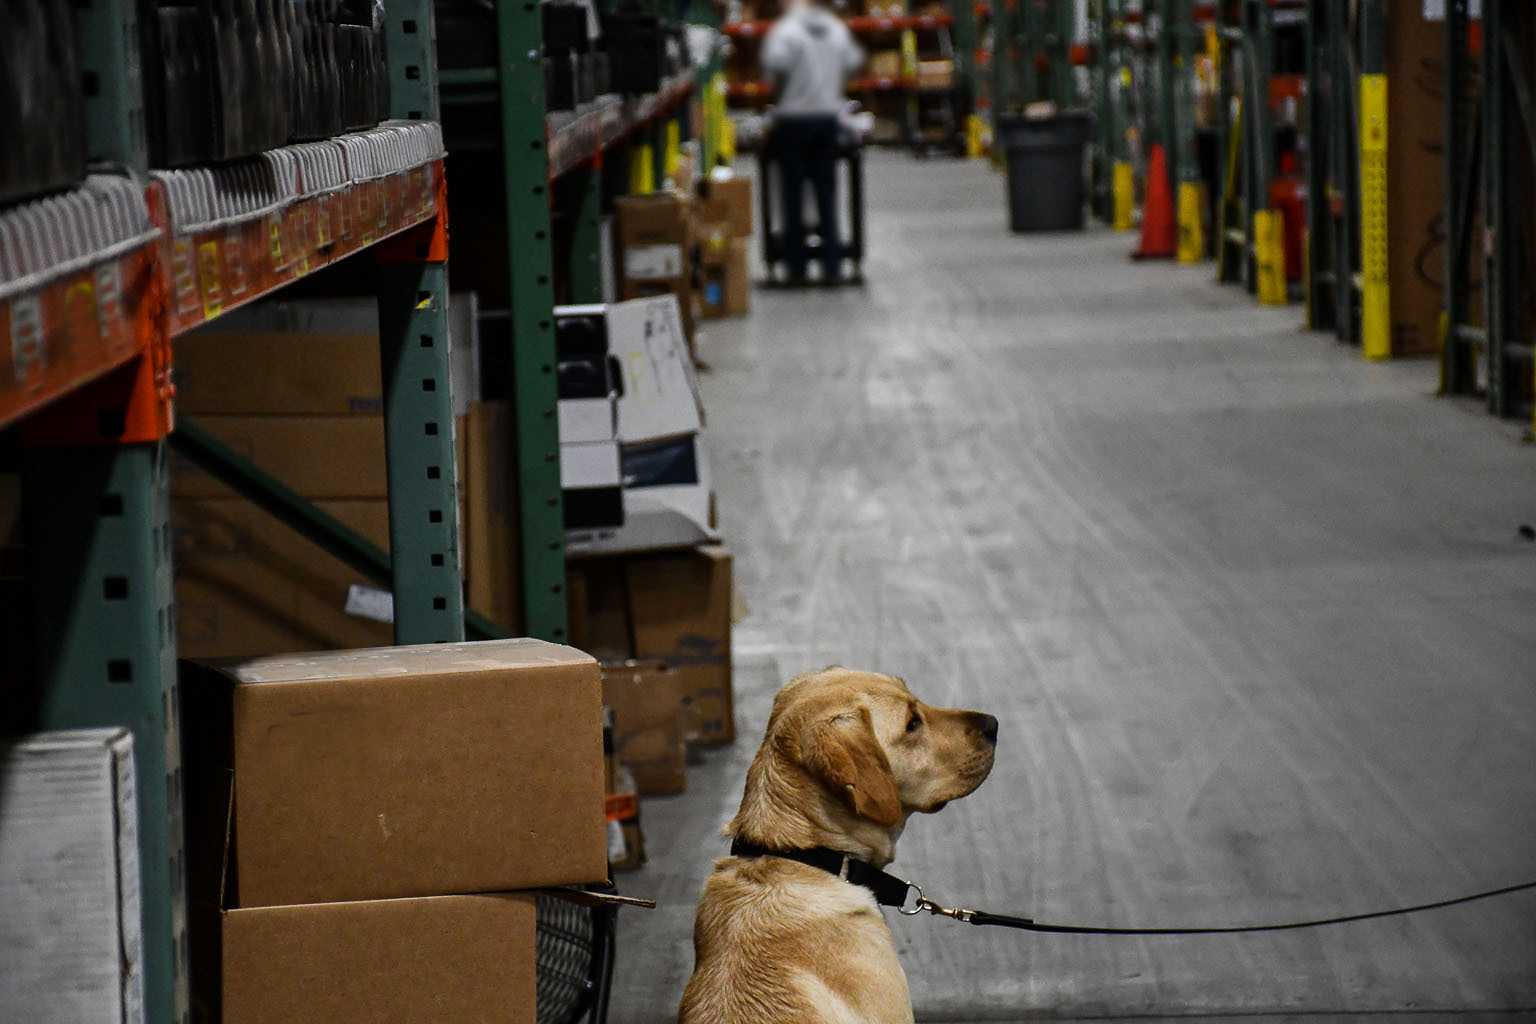 Heide searches a warehouse